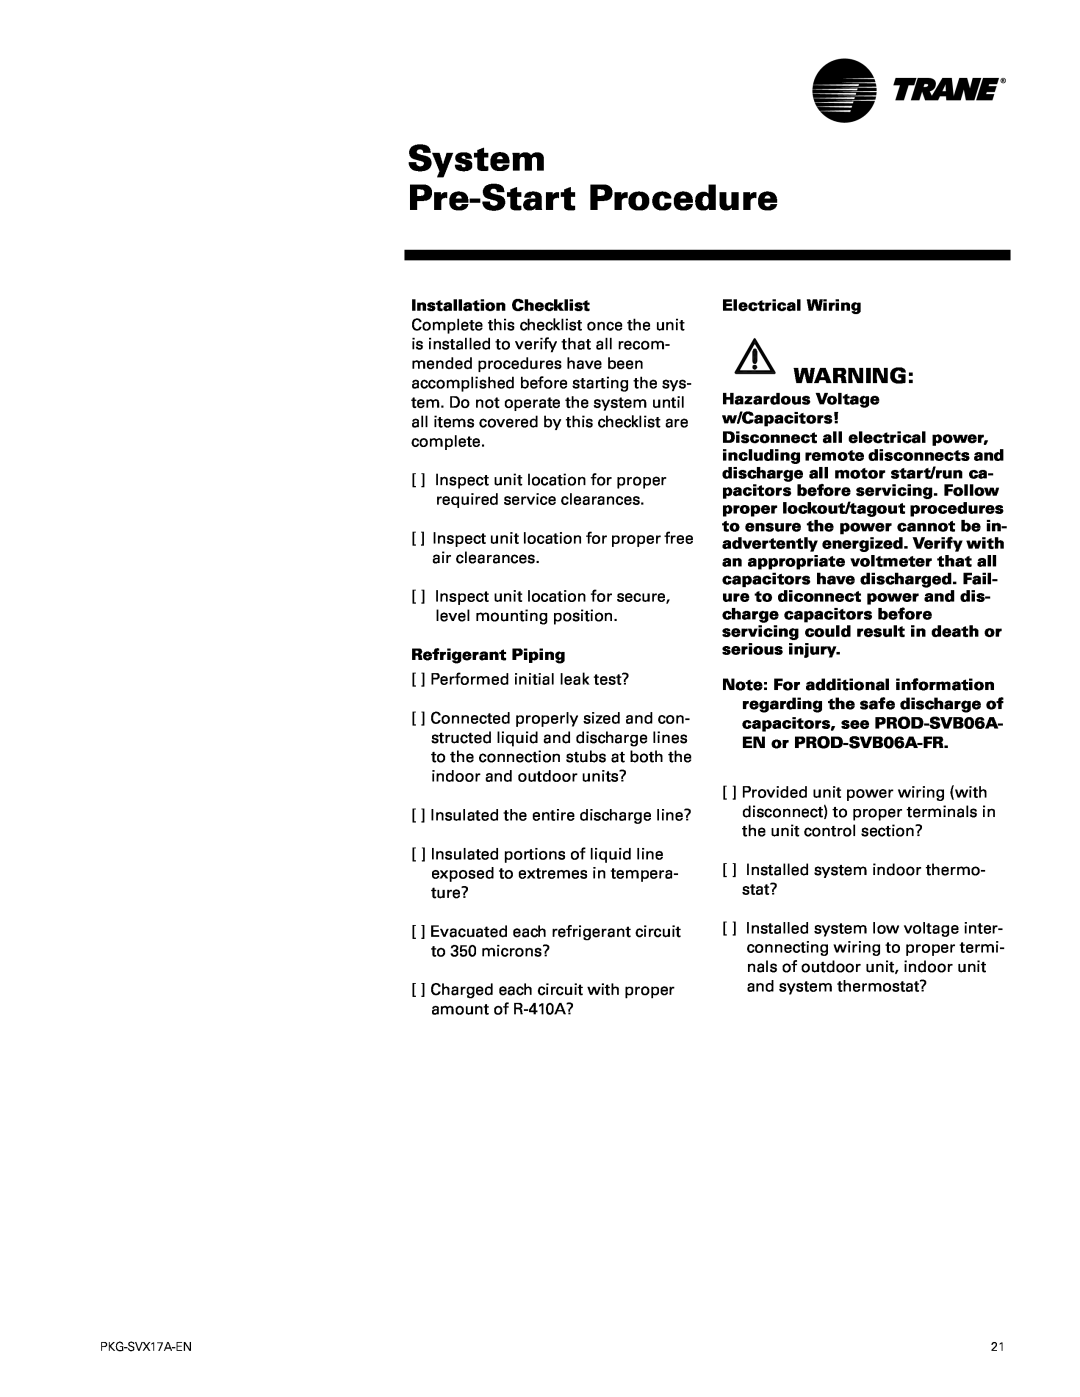 Trane PKG-SVX17A-EN manual System Pre-StartProcedure 